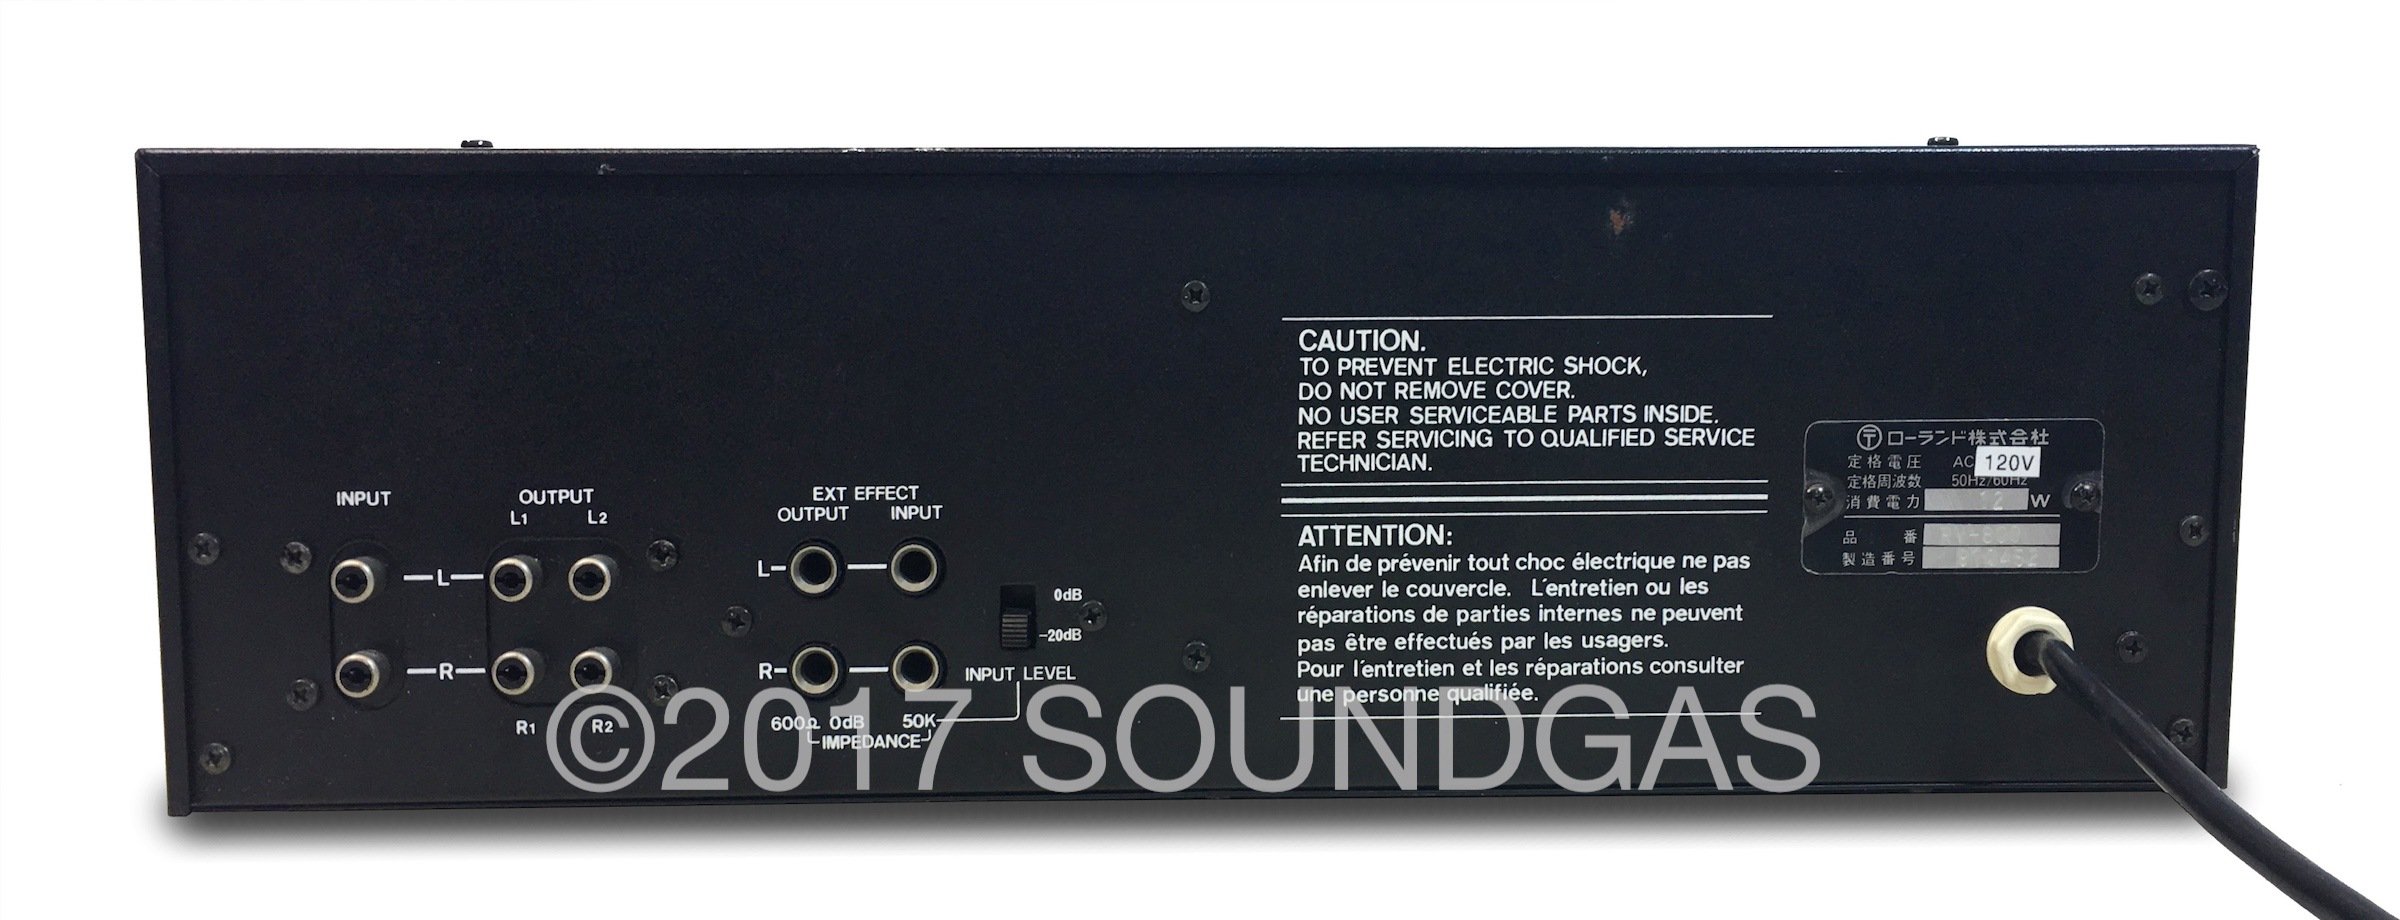 Roland RSS RV-800 Stereo Reverb Rack Unit FOR SALE - Soundgas